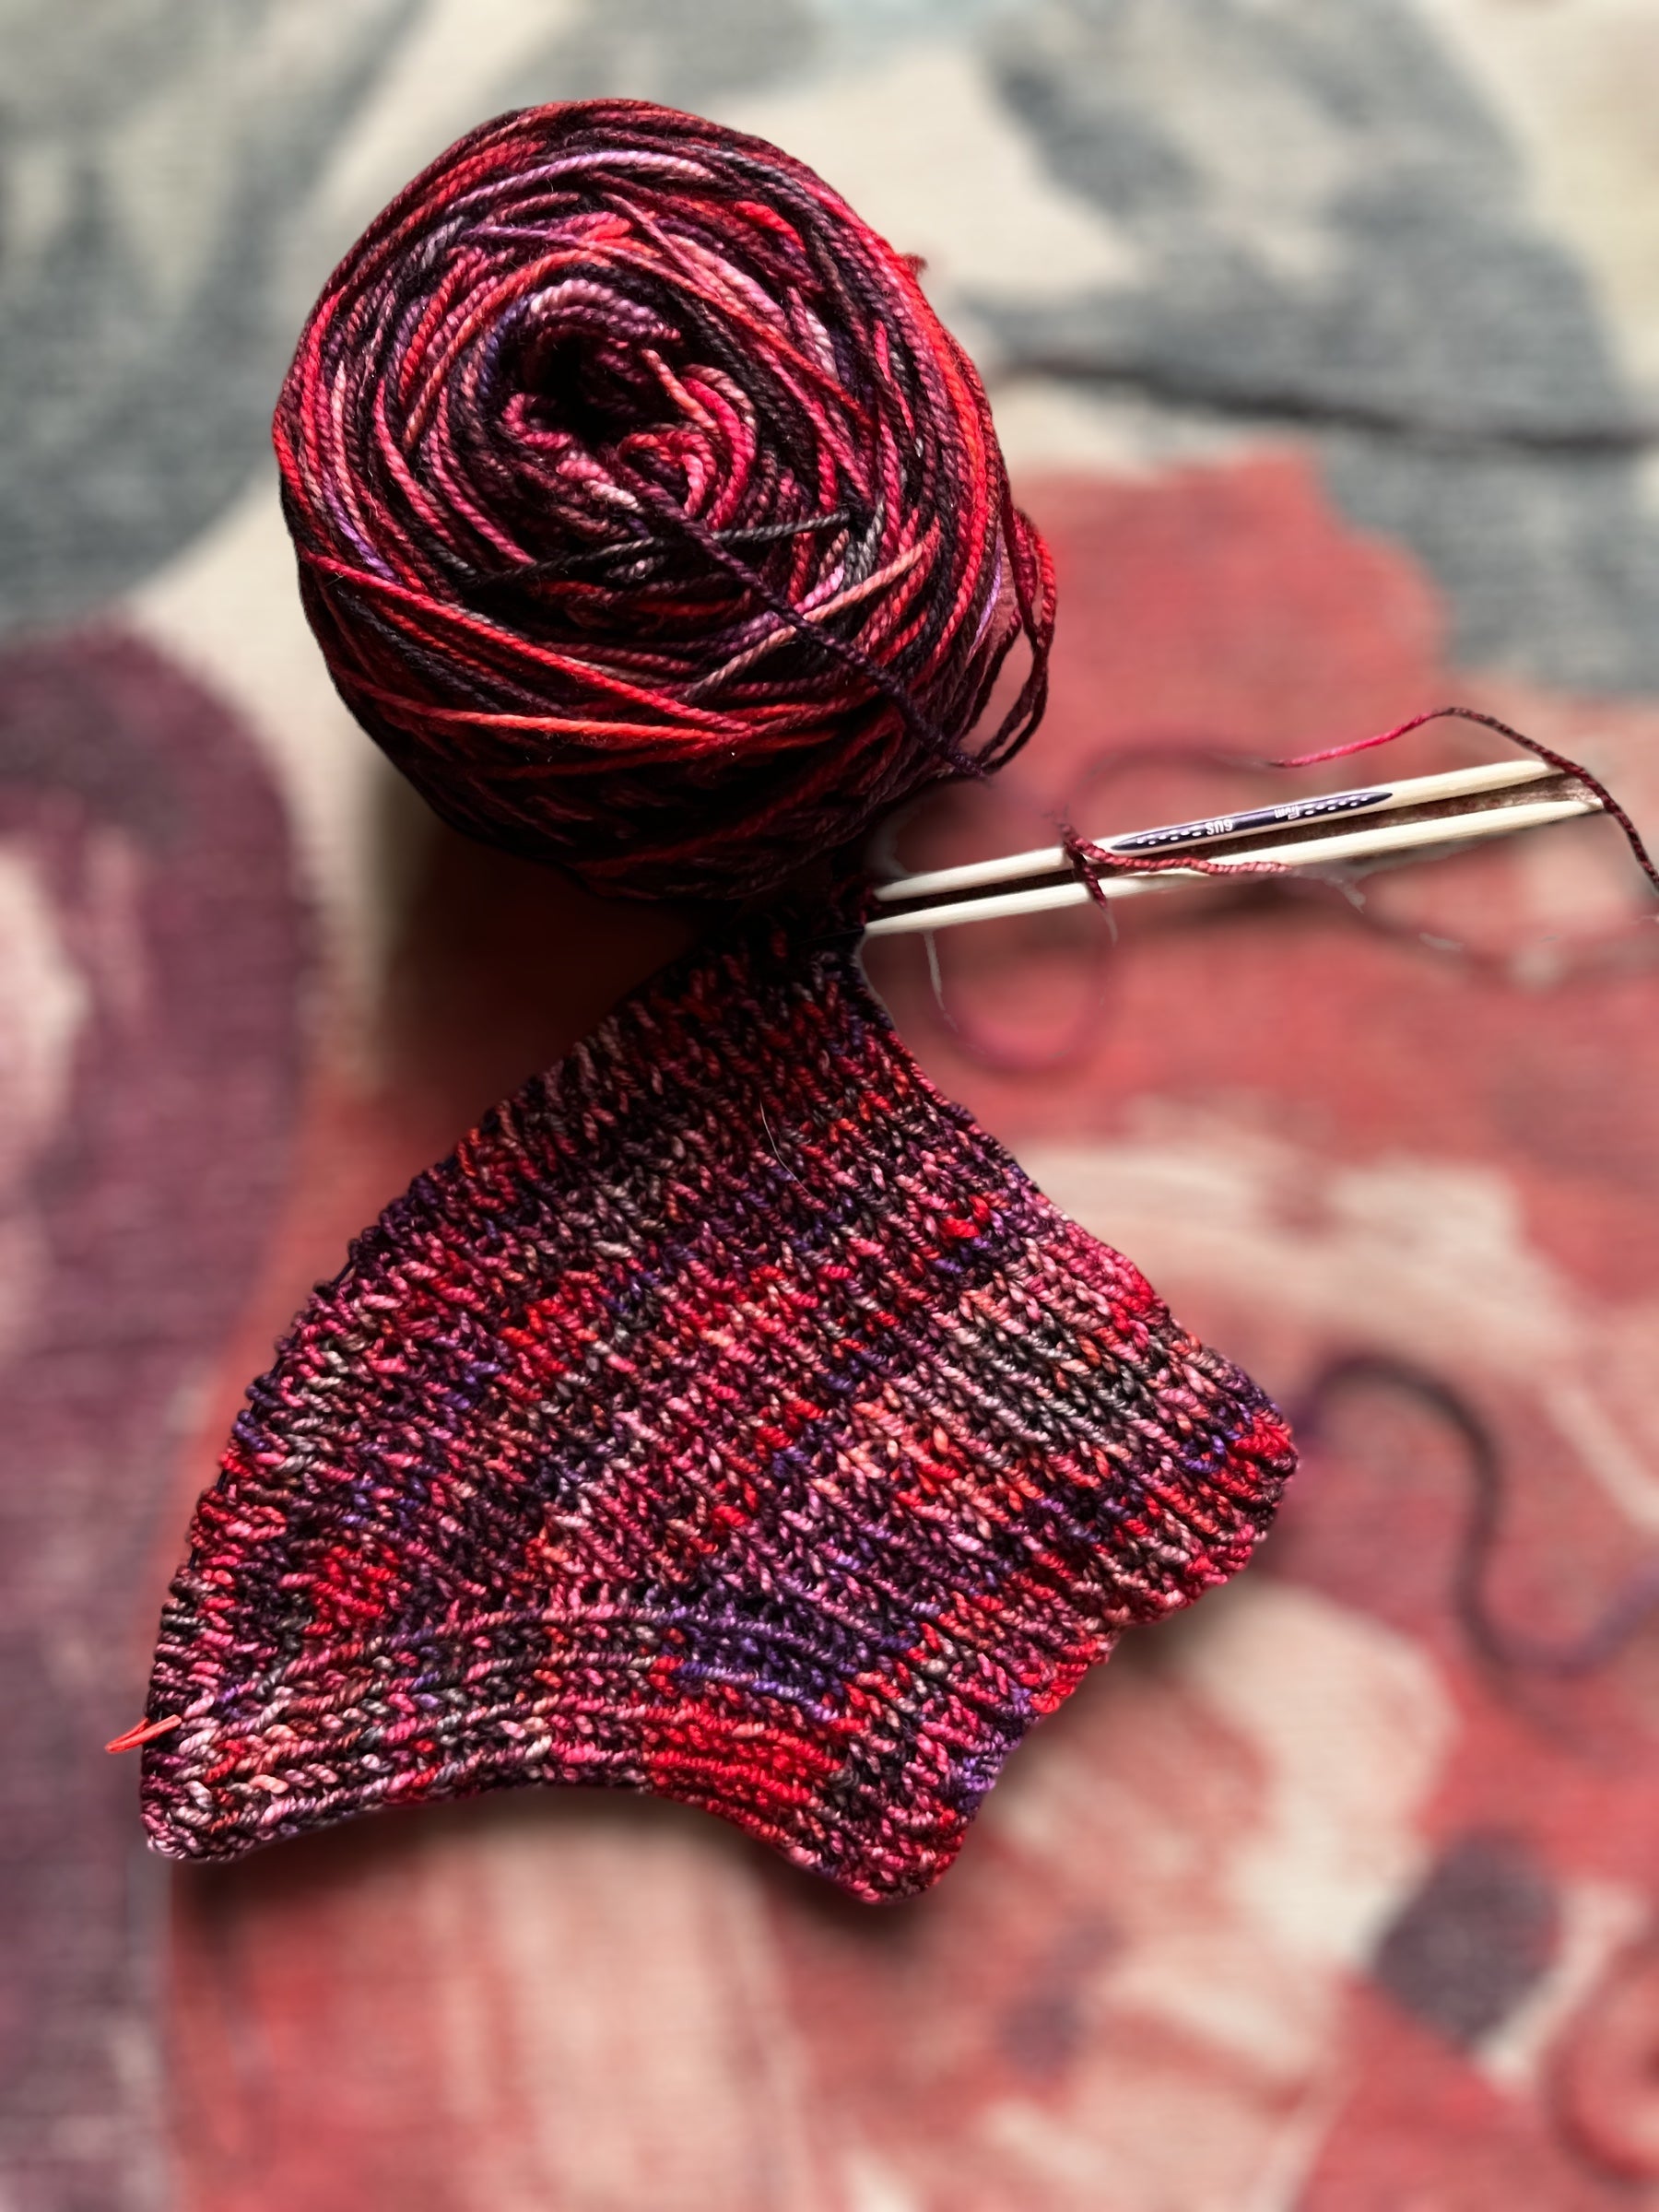 Knit-Knacks: Popular Knitting Hacks for Every Yarn Enthusiast